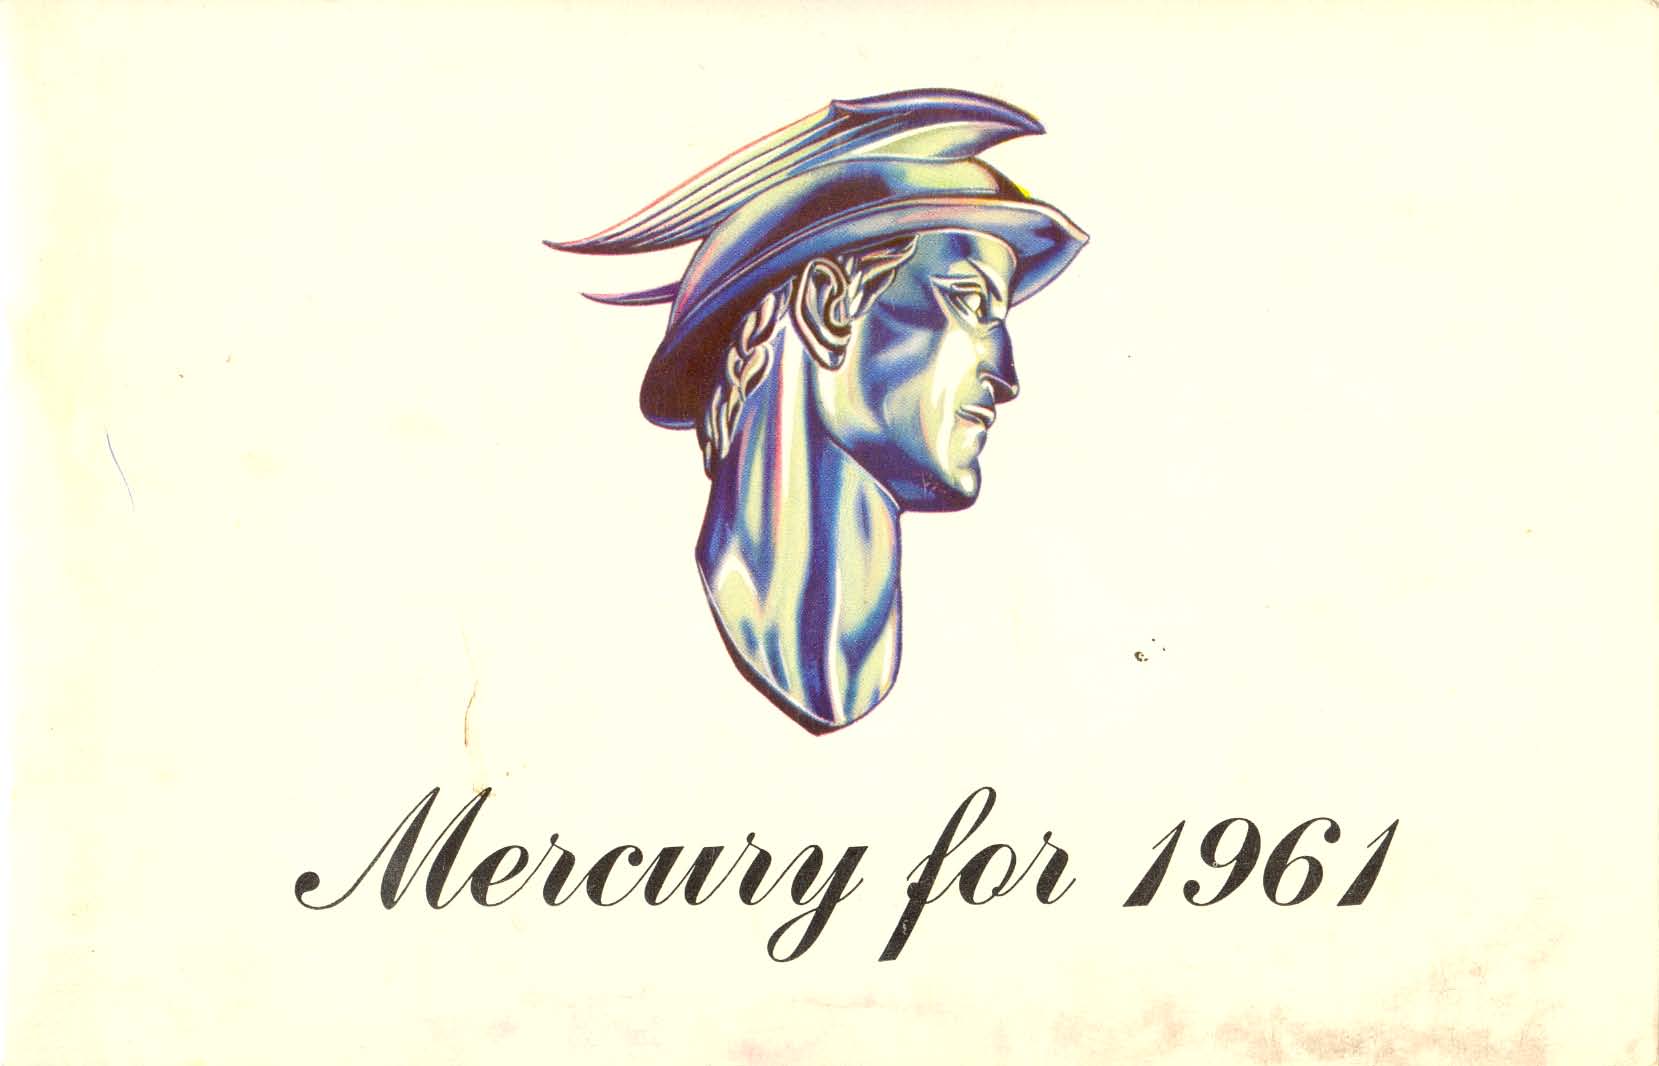 1961 Mercury Owners Manual